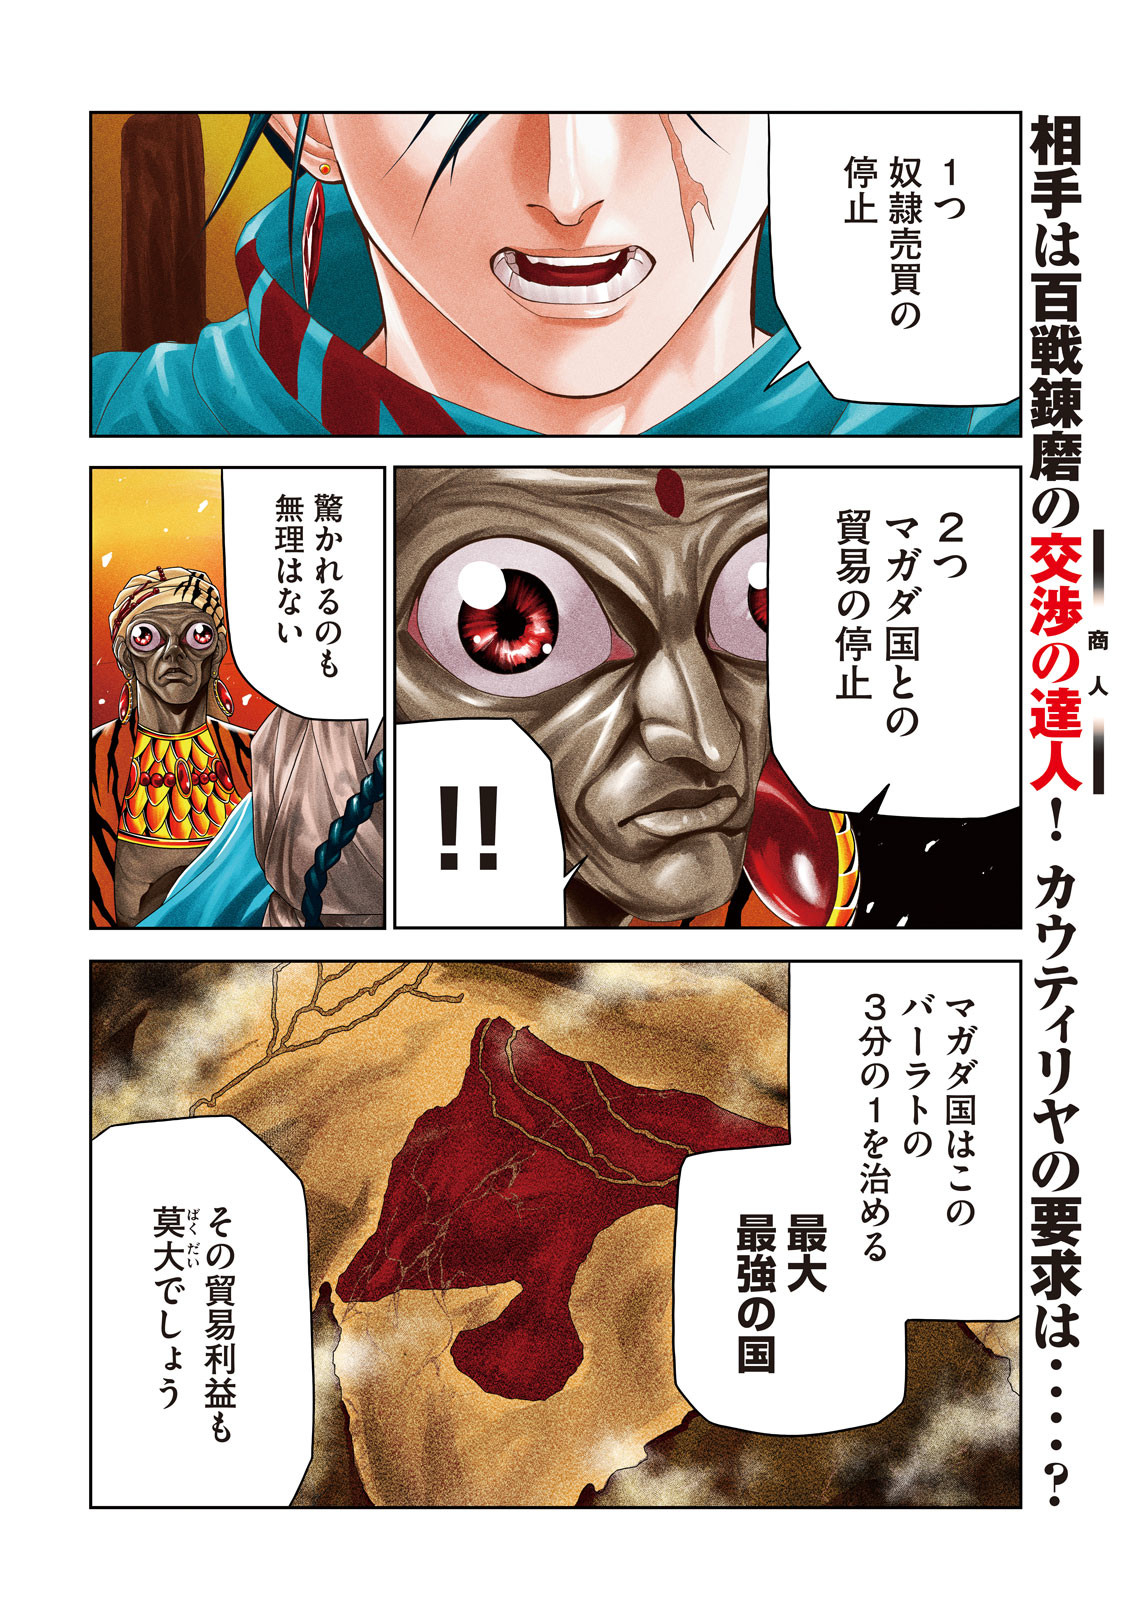 राजा ラージャ 第7話 - Page 4